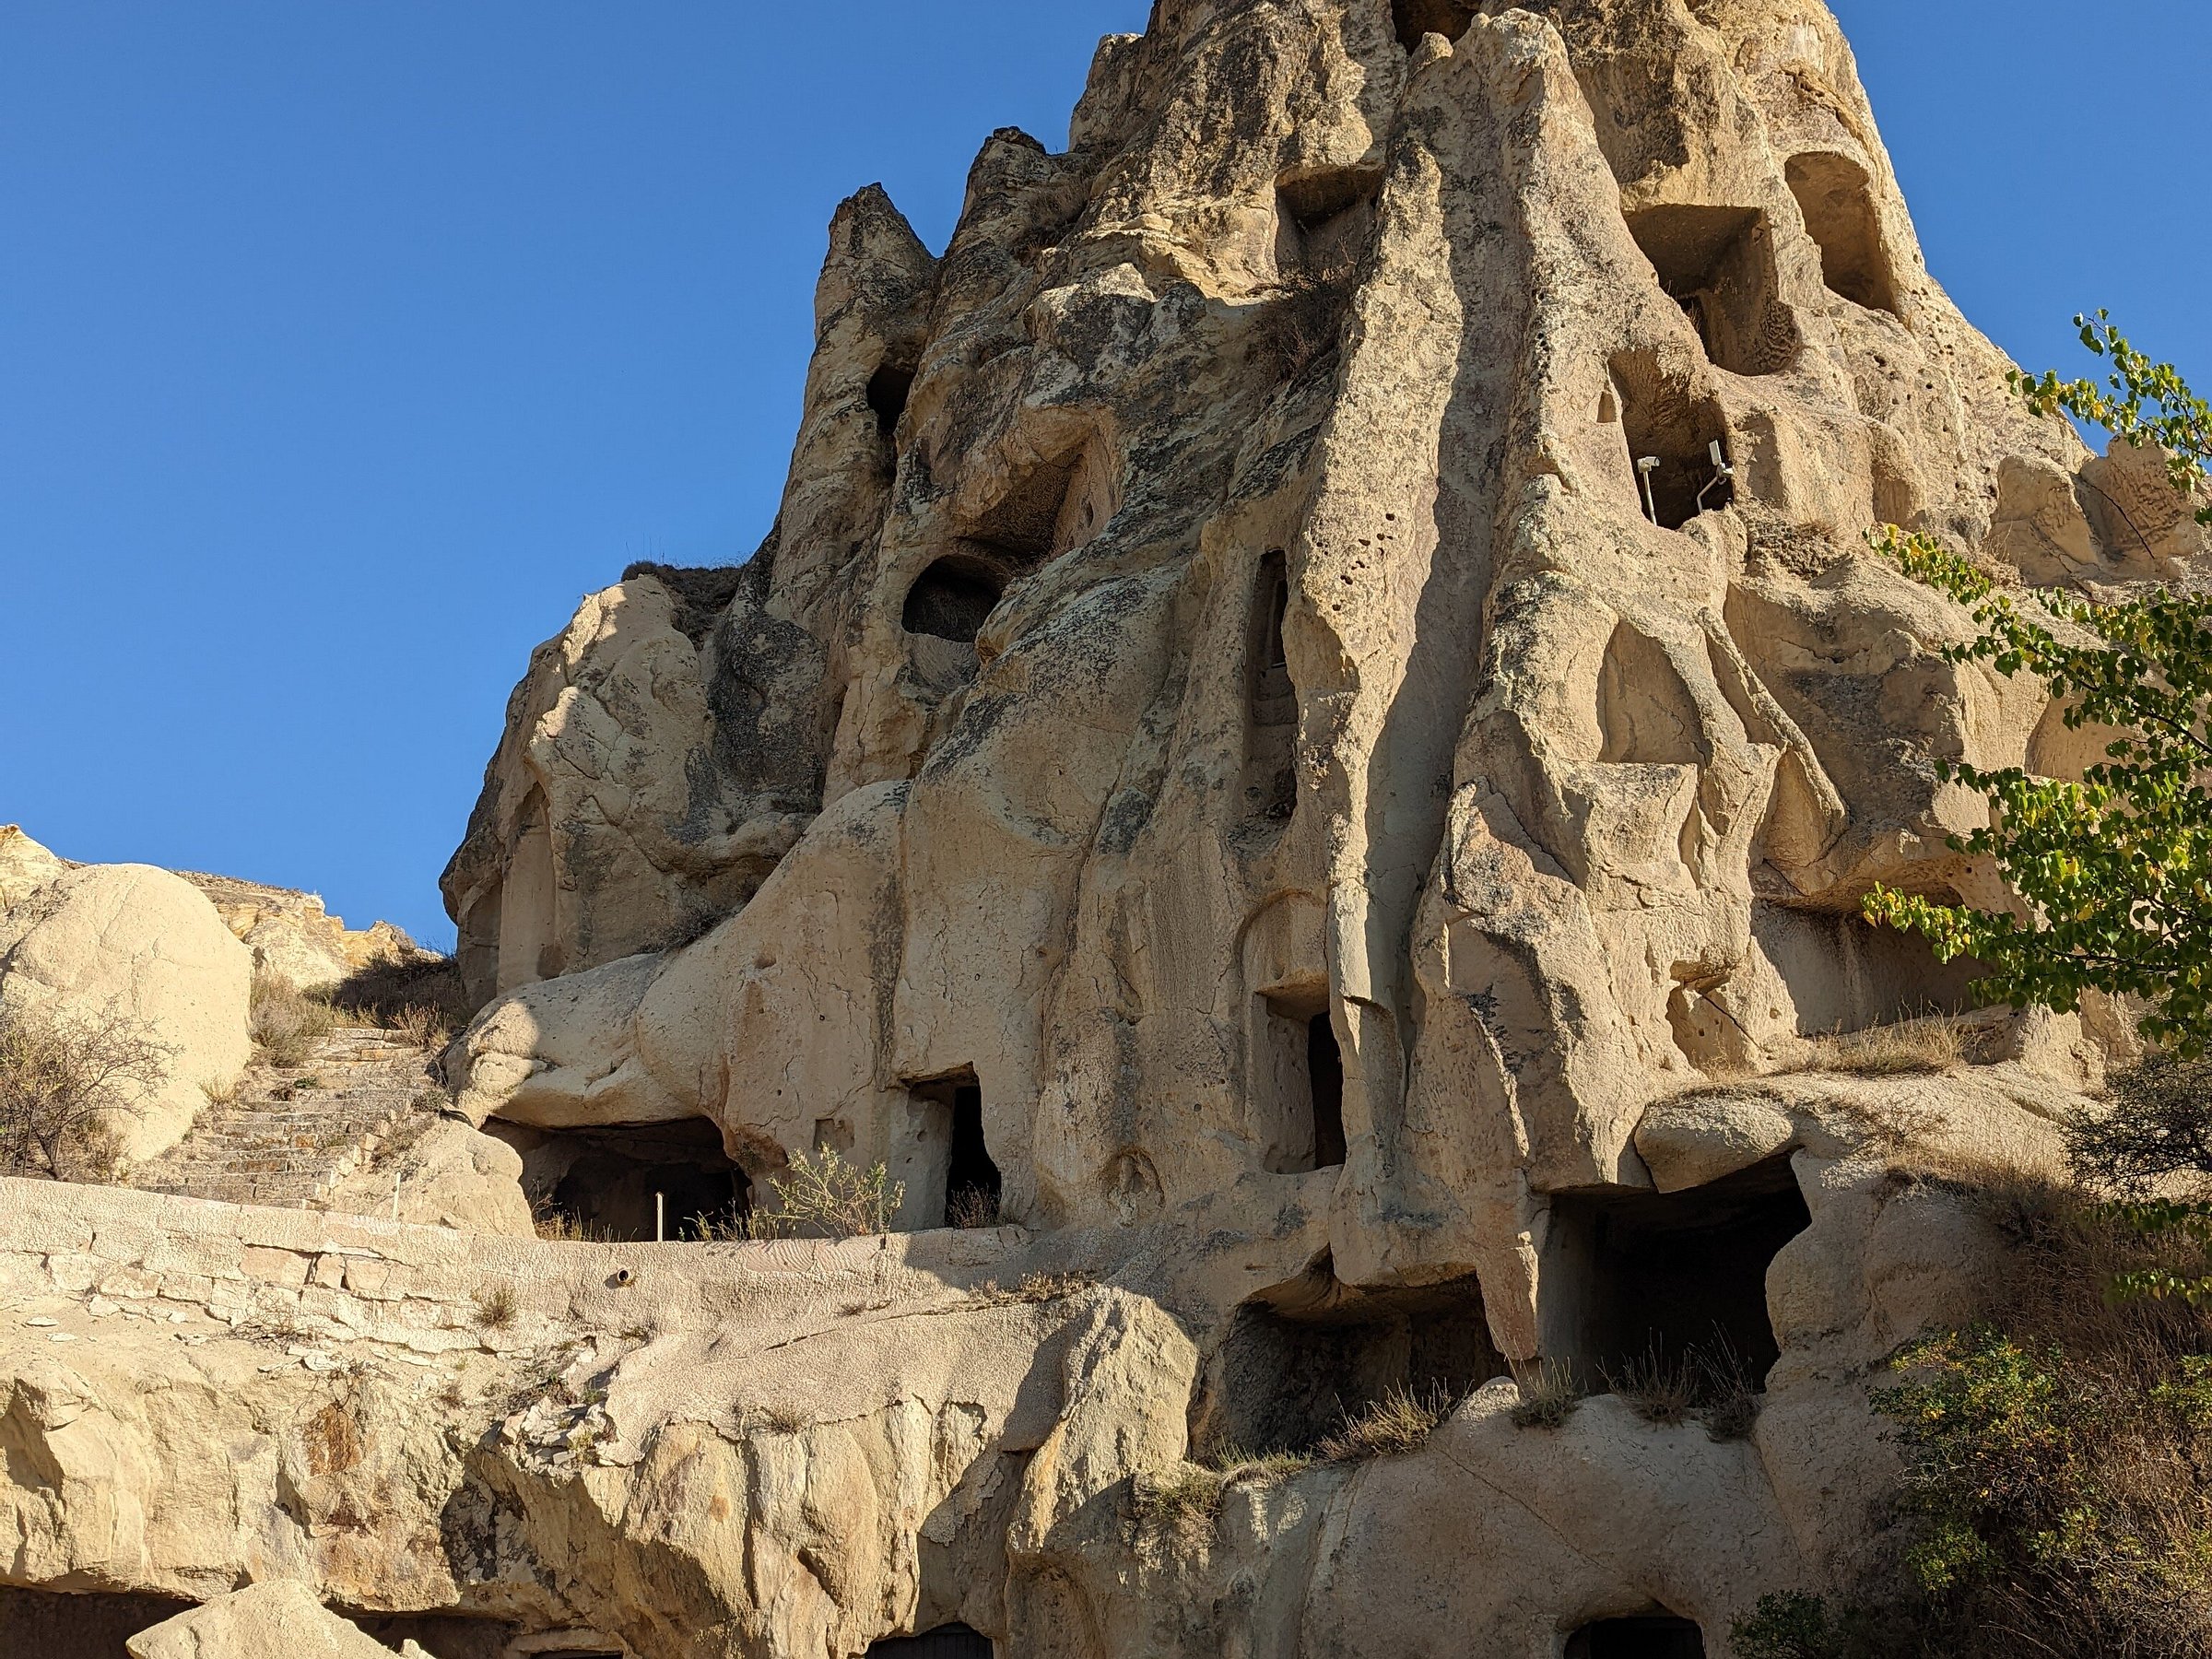 companion travel cappadocia